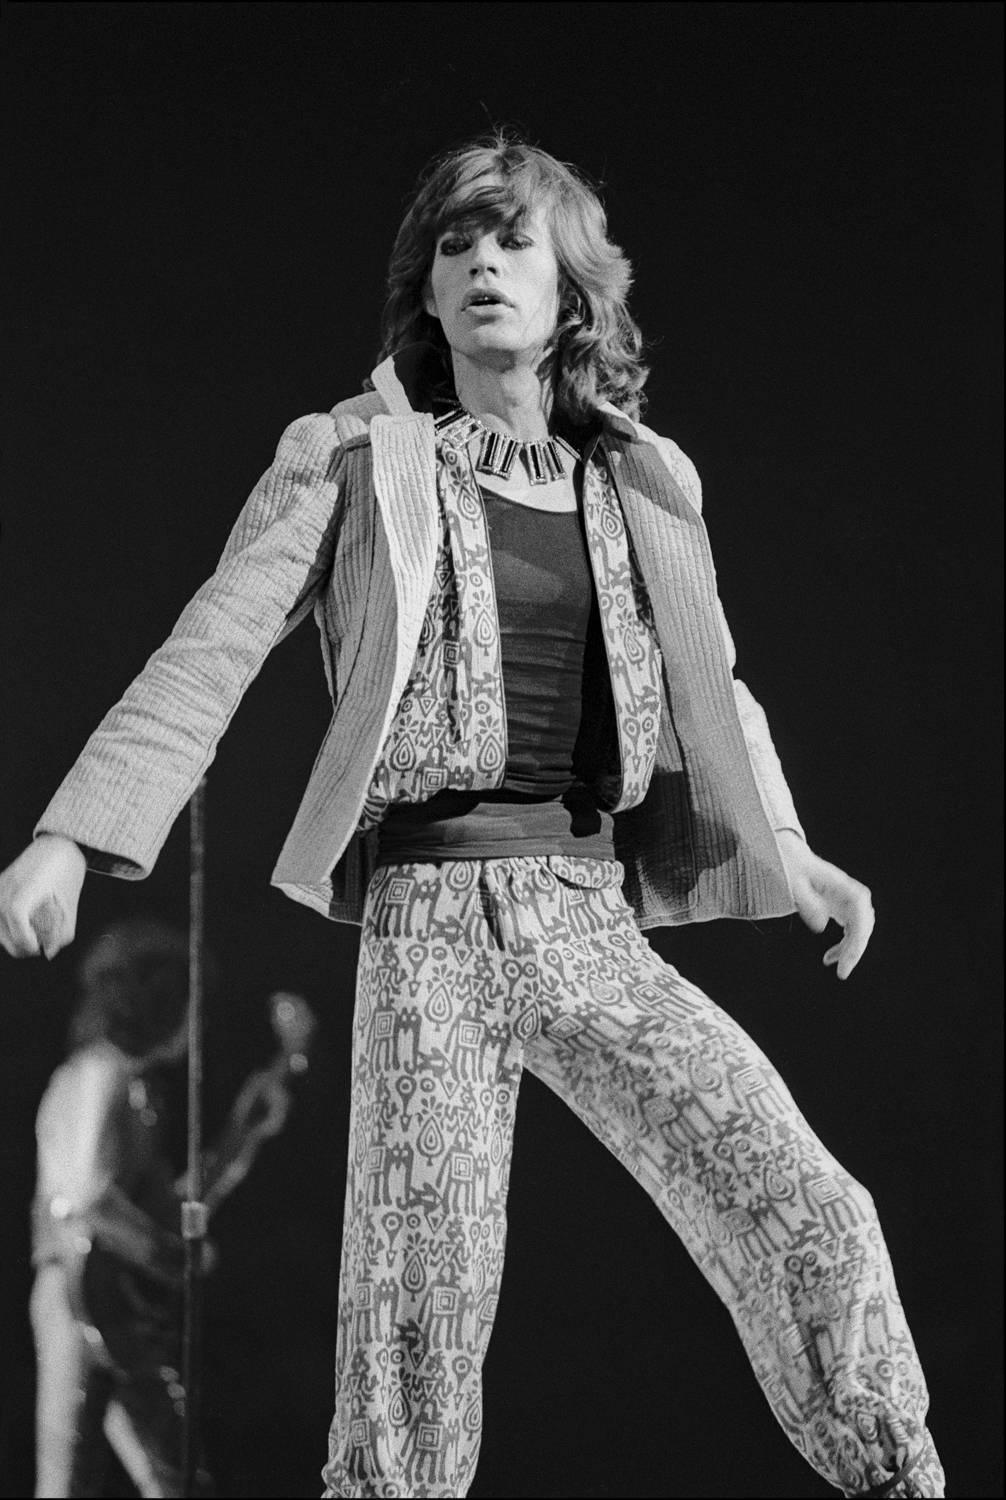 Allan Tannenbaum Black and White Photograph - Mick Jagger Performs